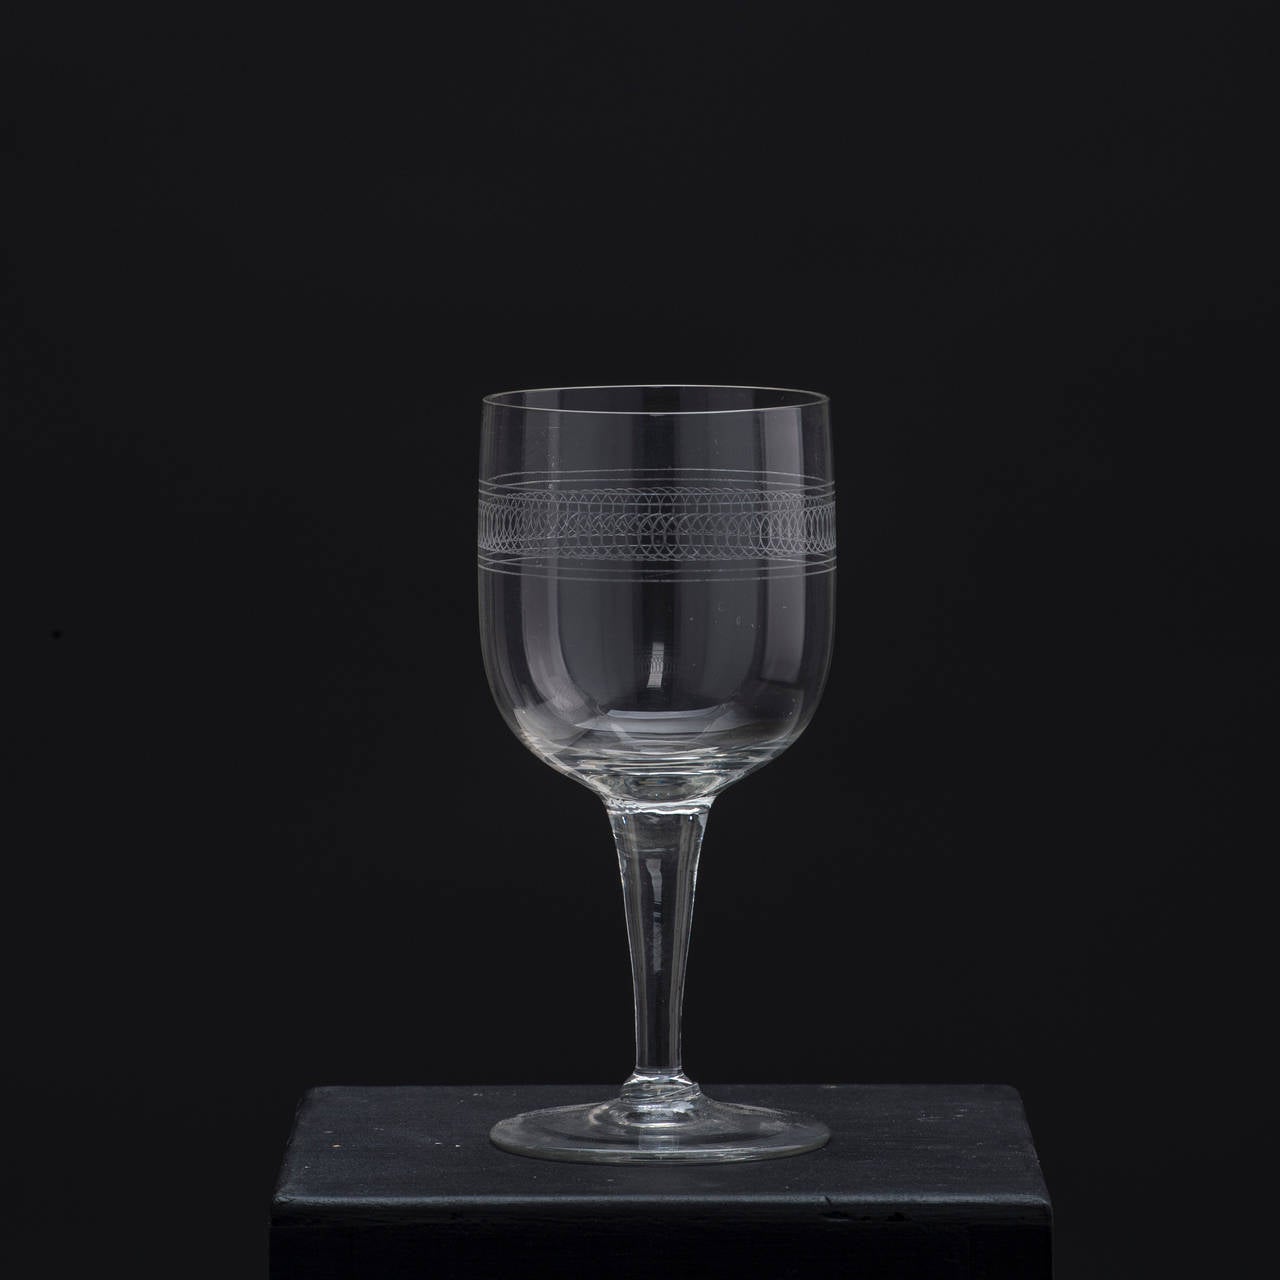 French wine glasses circa 1880.
75 USD per piece.
(We have 7 pieces)